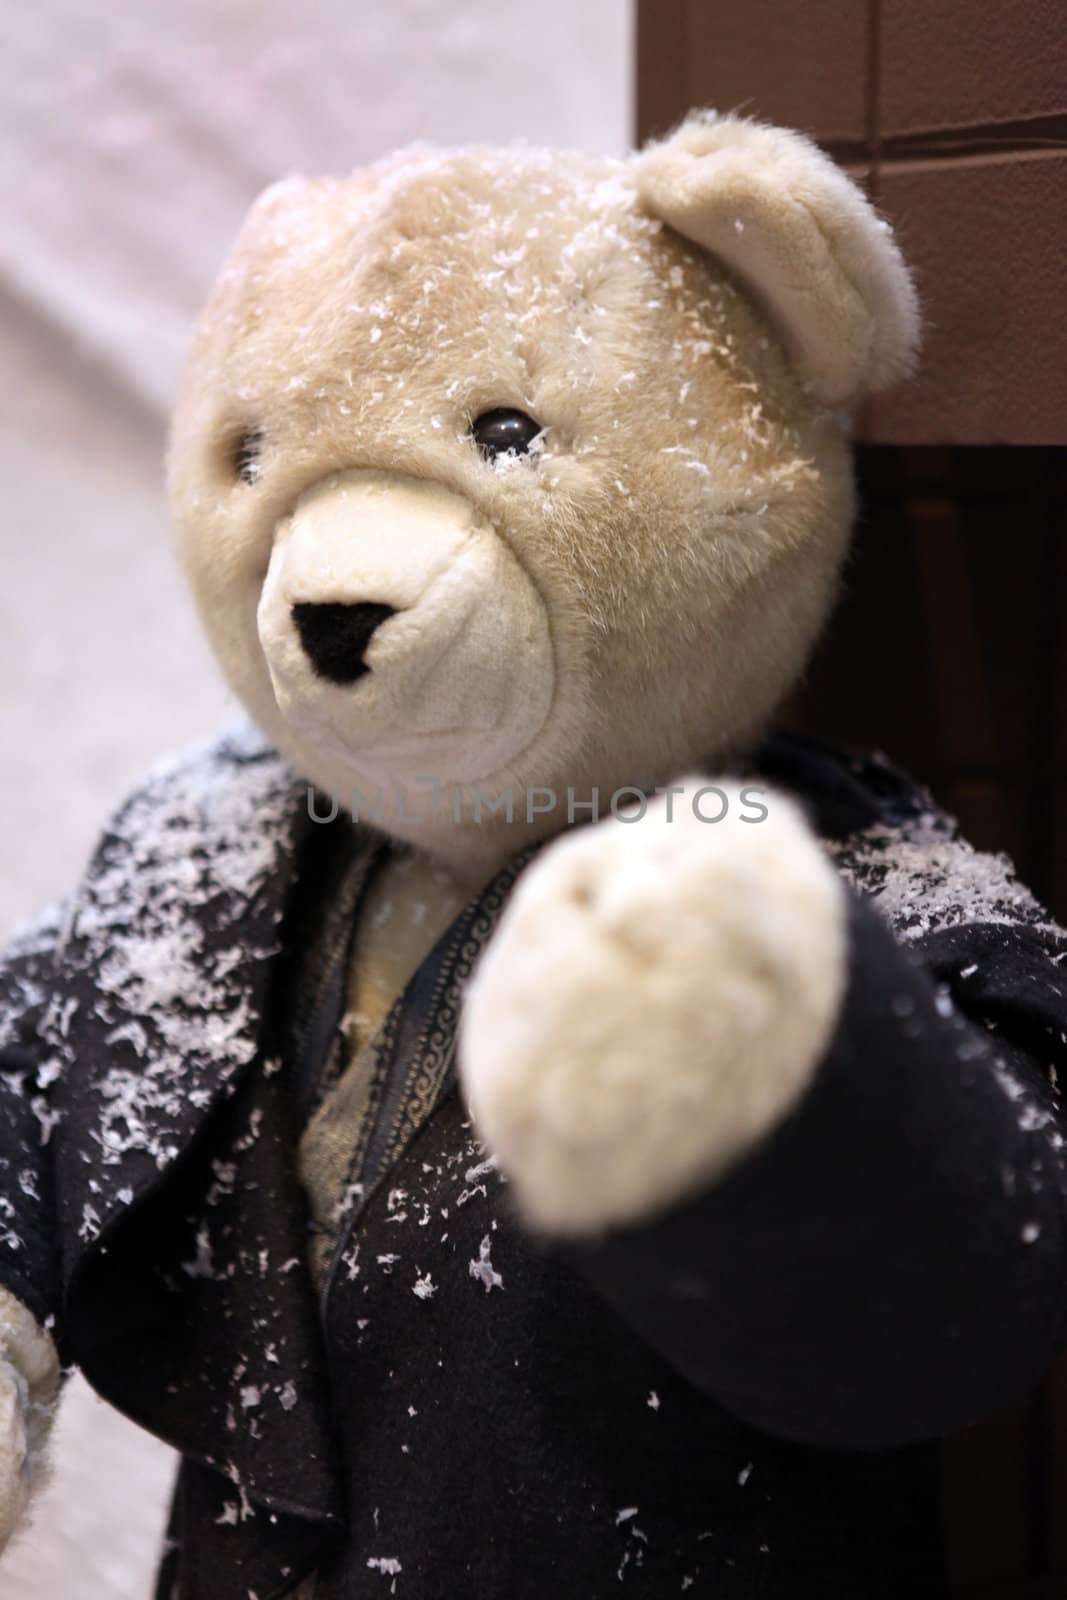 Teddy bear wearing jacket in the snow by phovoir